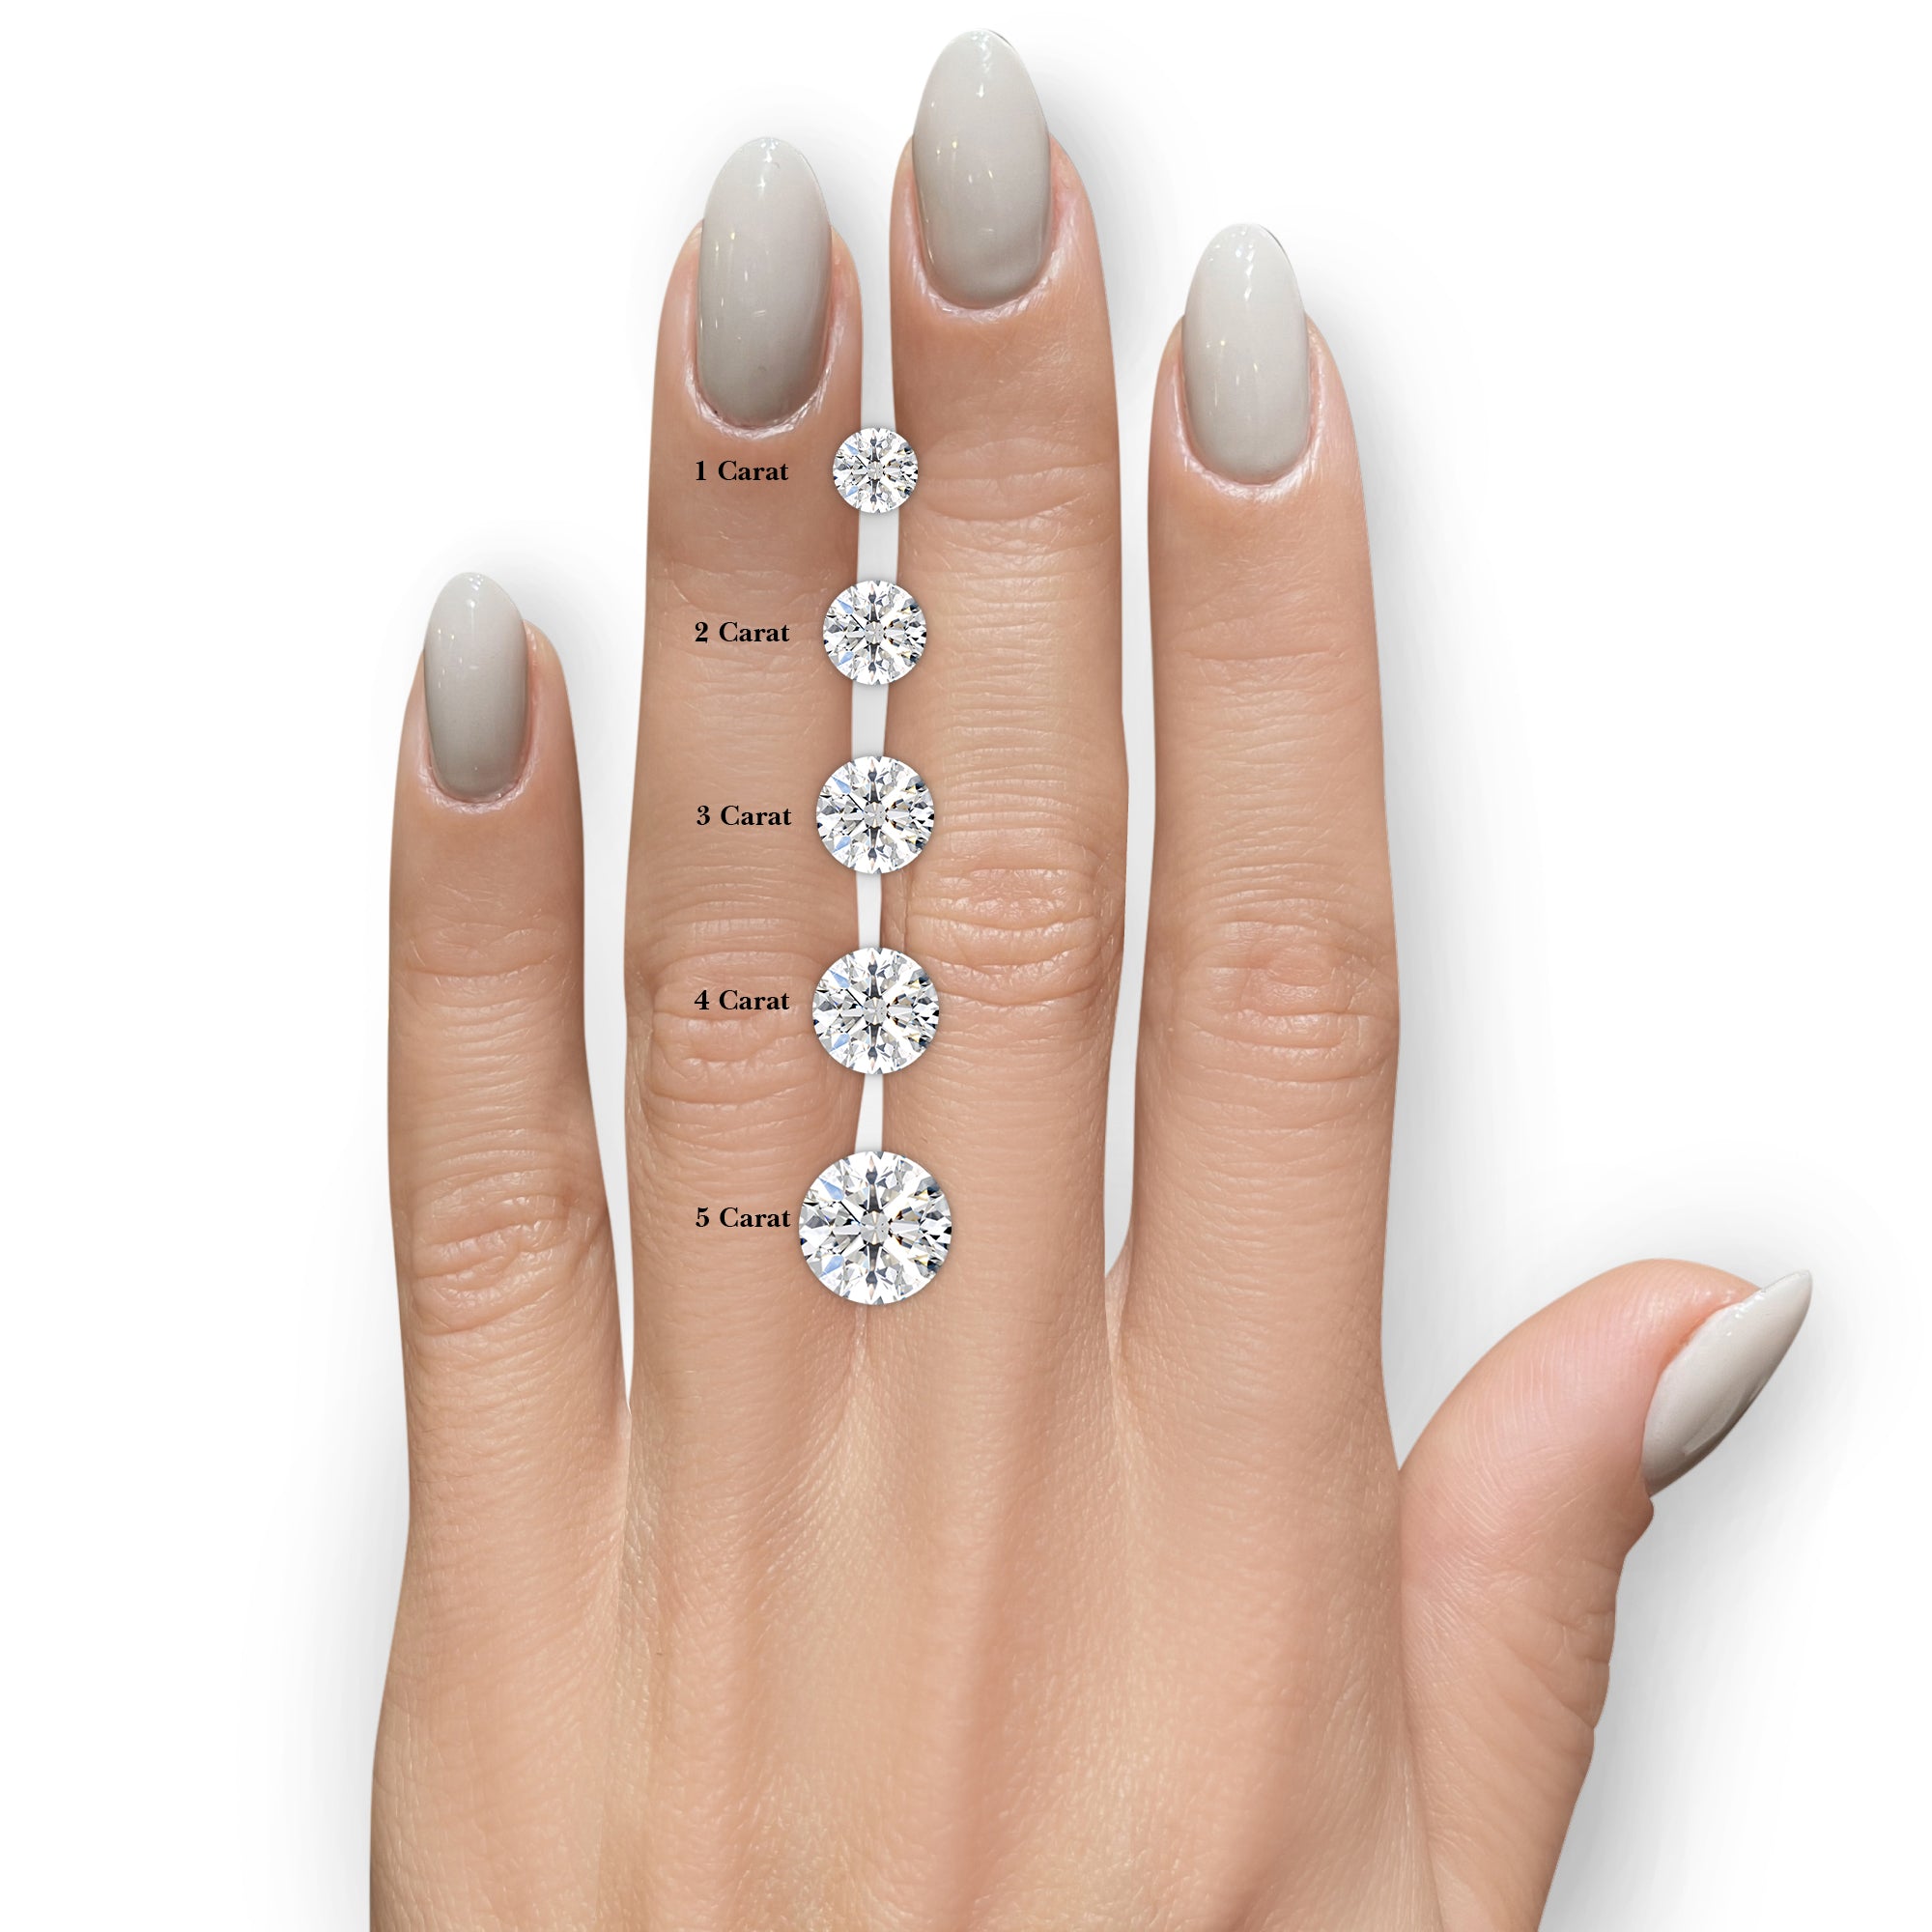 Alora Diamond Engagement Ring -14K White Gold